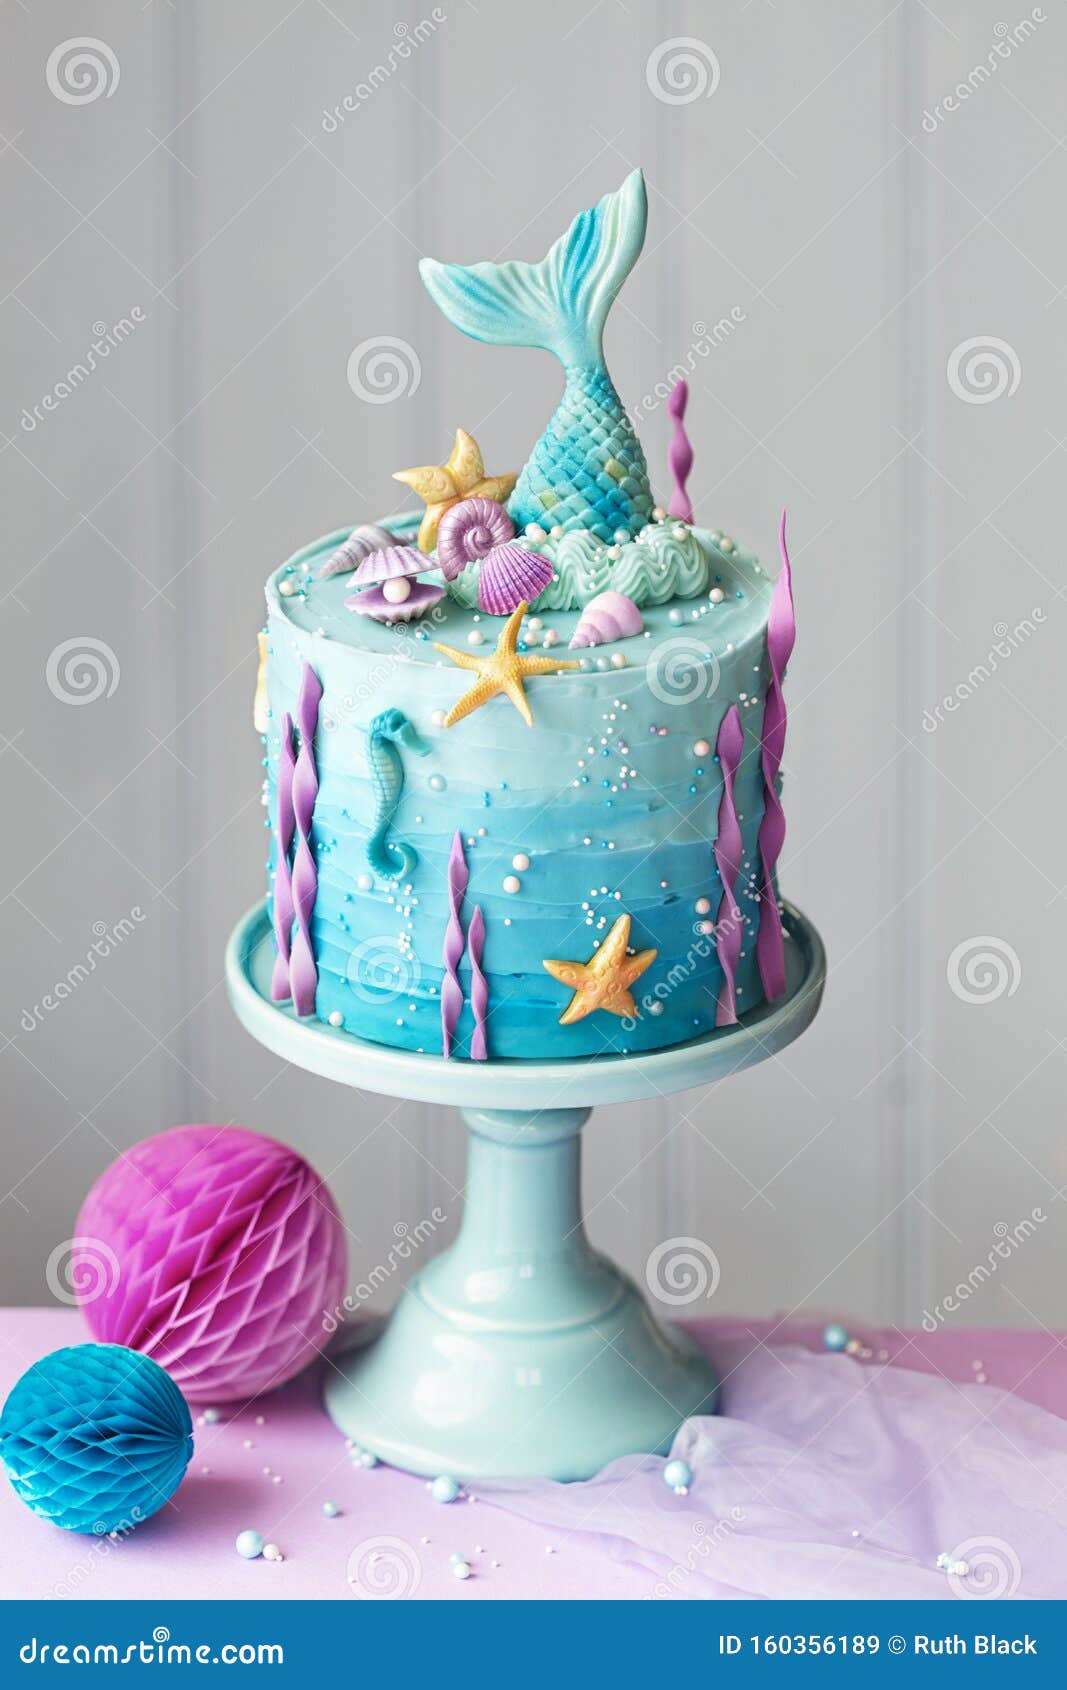 Cake design Gâteau d'anniversaire Sirène